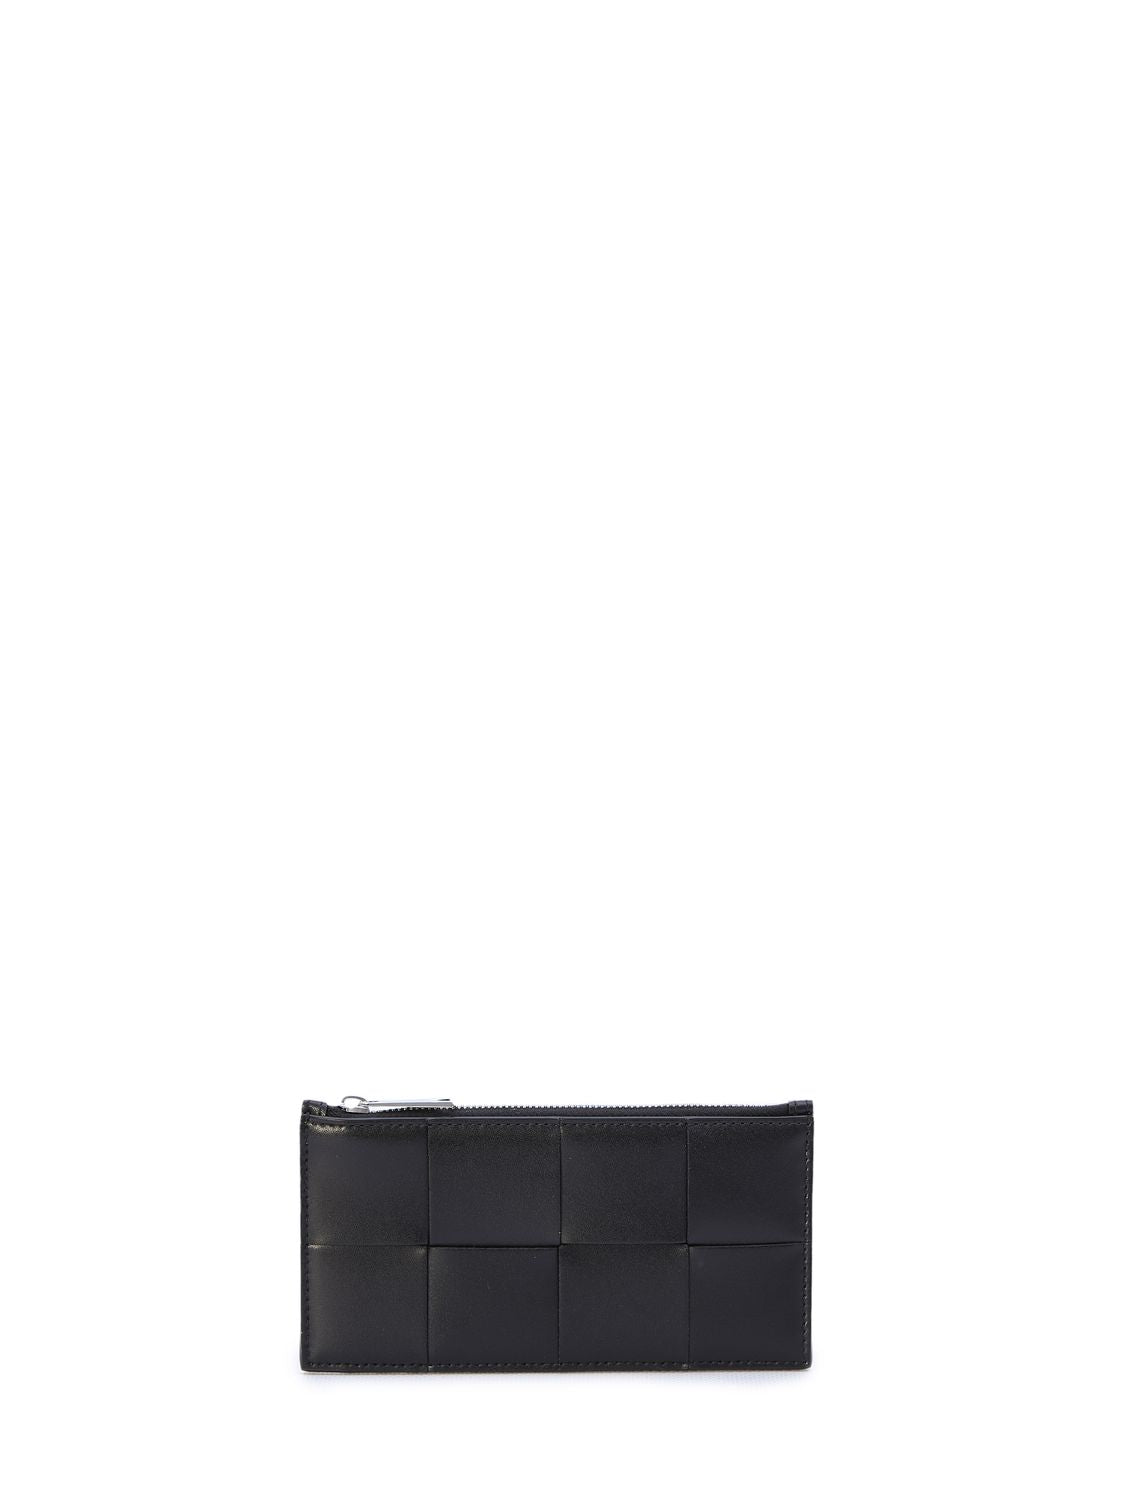 BOTTEGA VENETA Men's Black Leather Card Holder - Intrecciato Design, Silver-Tone Hardware